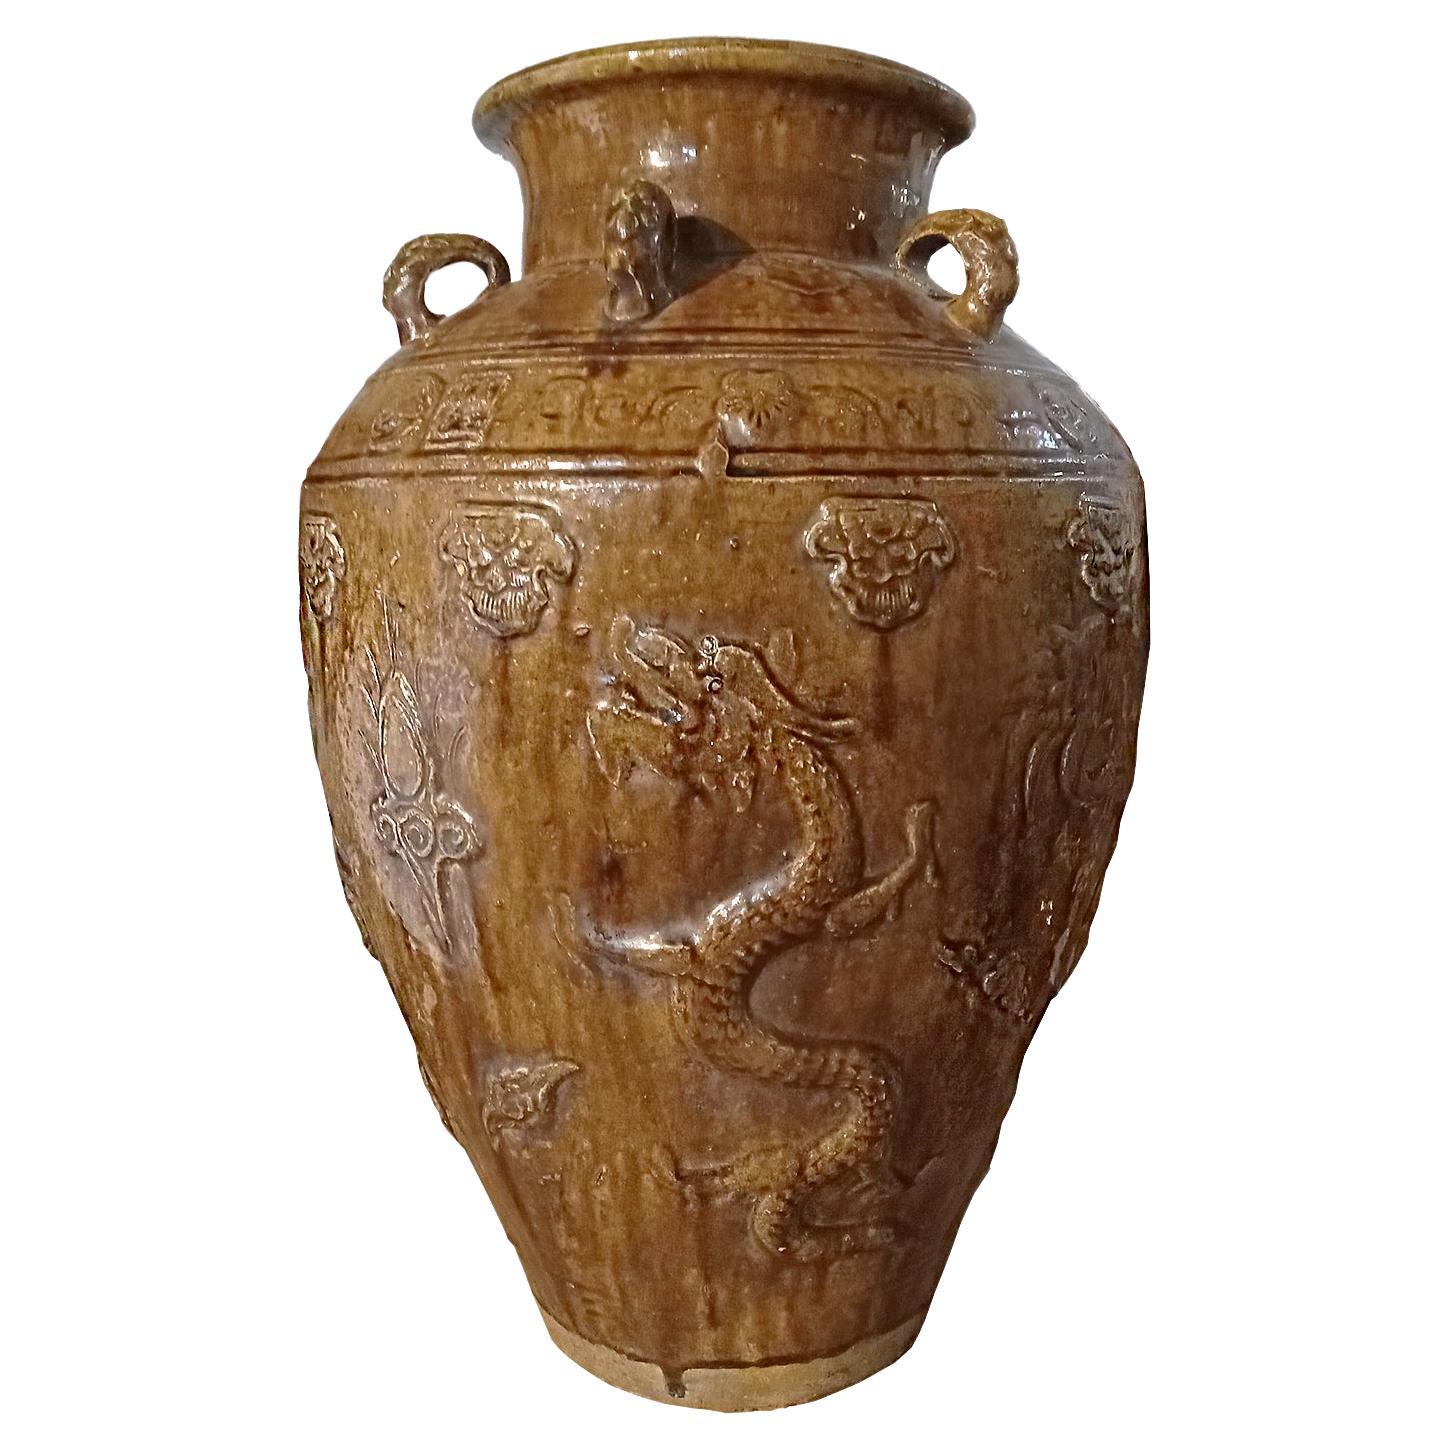 Indonesian Terracotta Urn / Jar / Vase with Brown Glaze and Dragon Motif